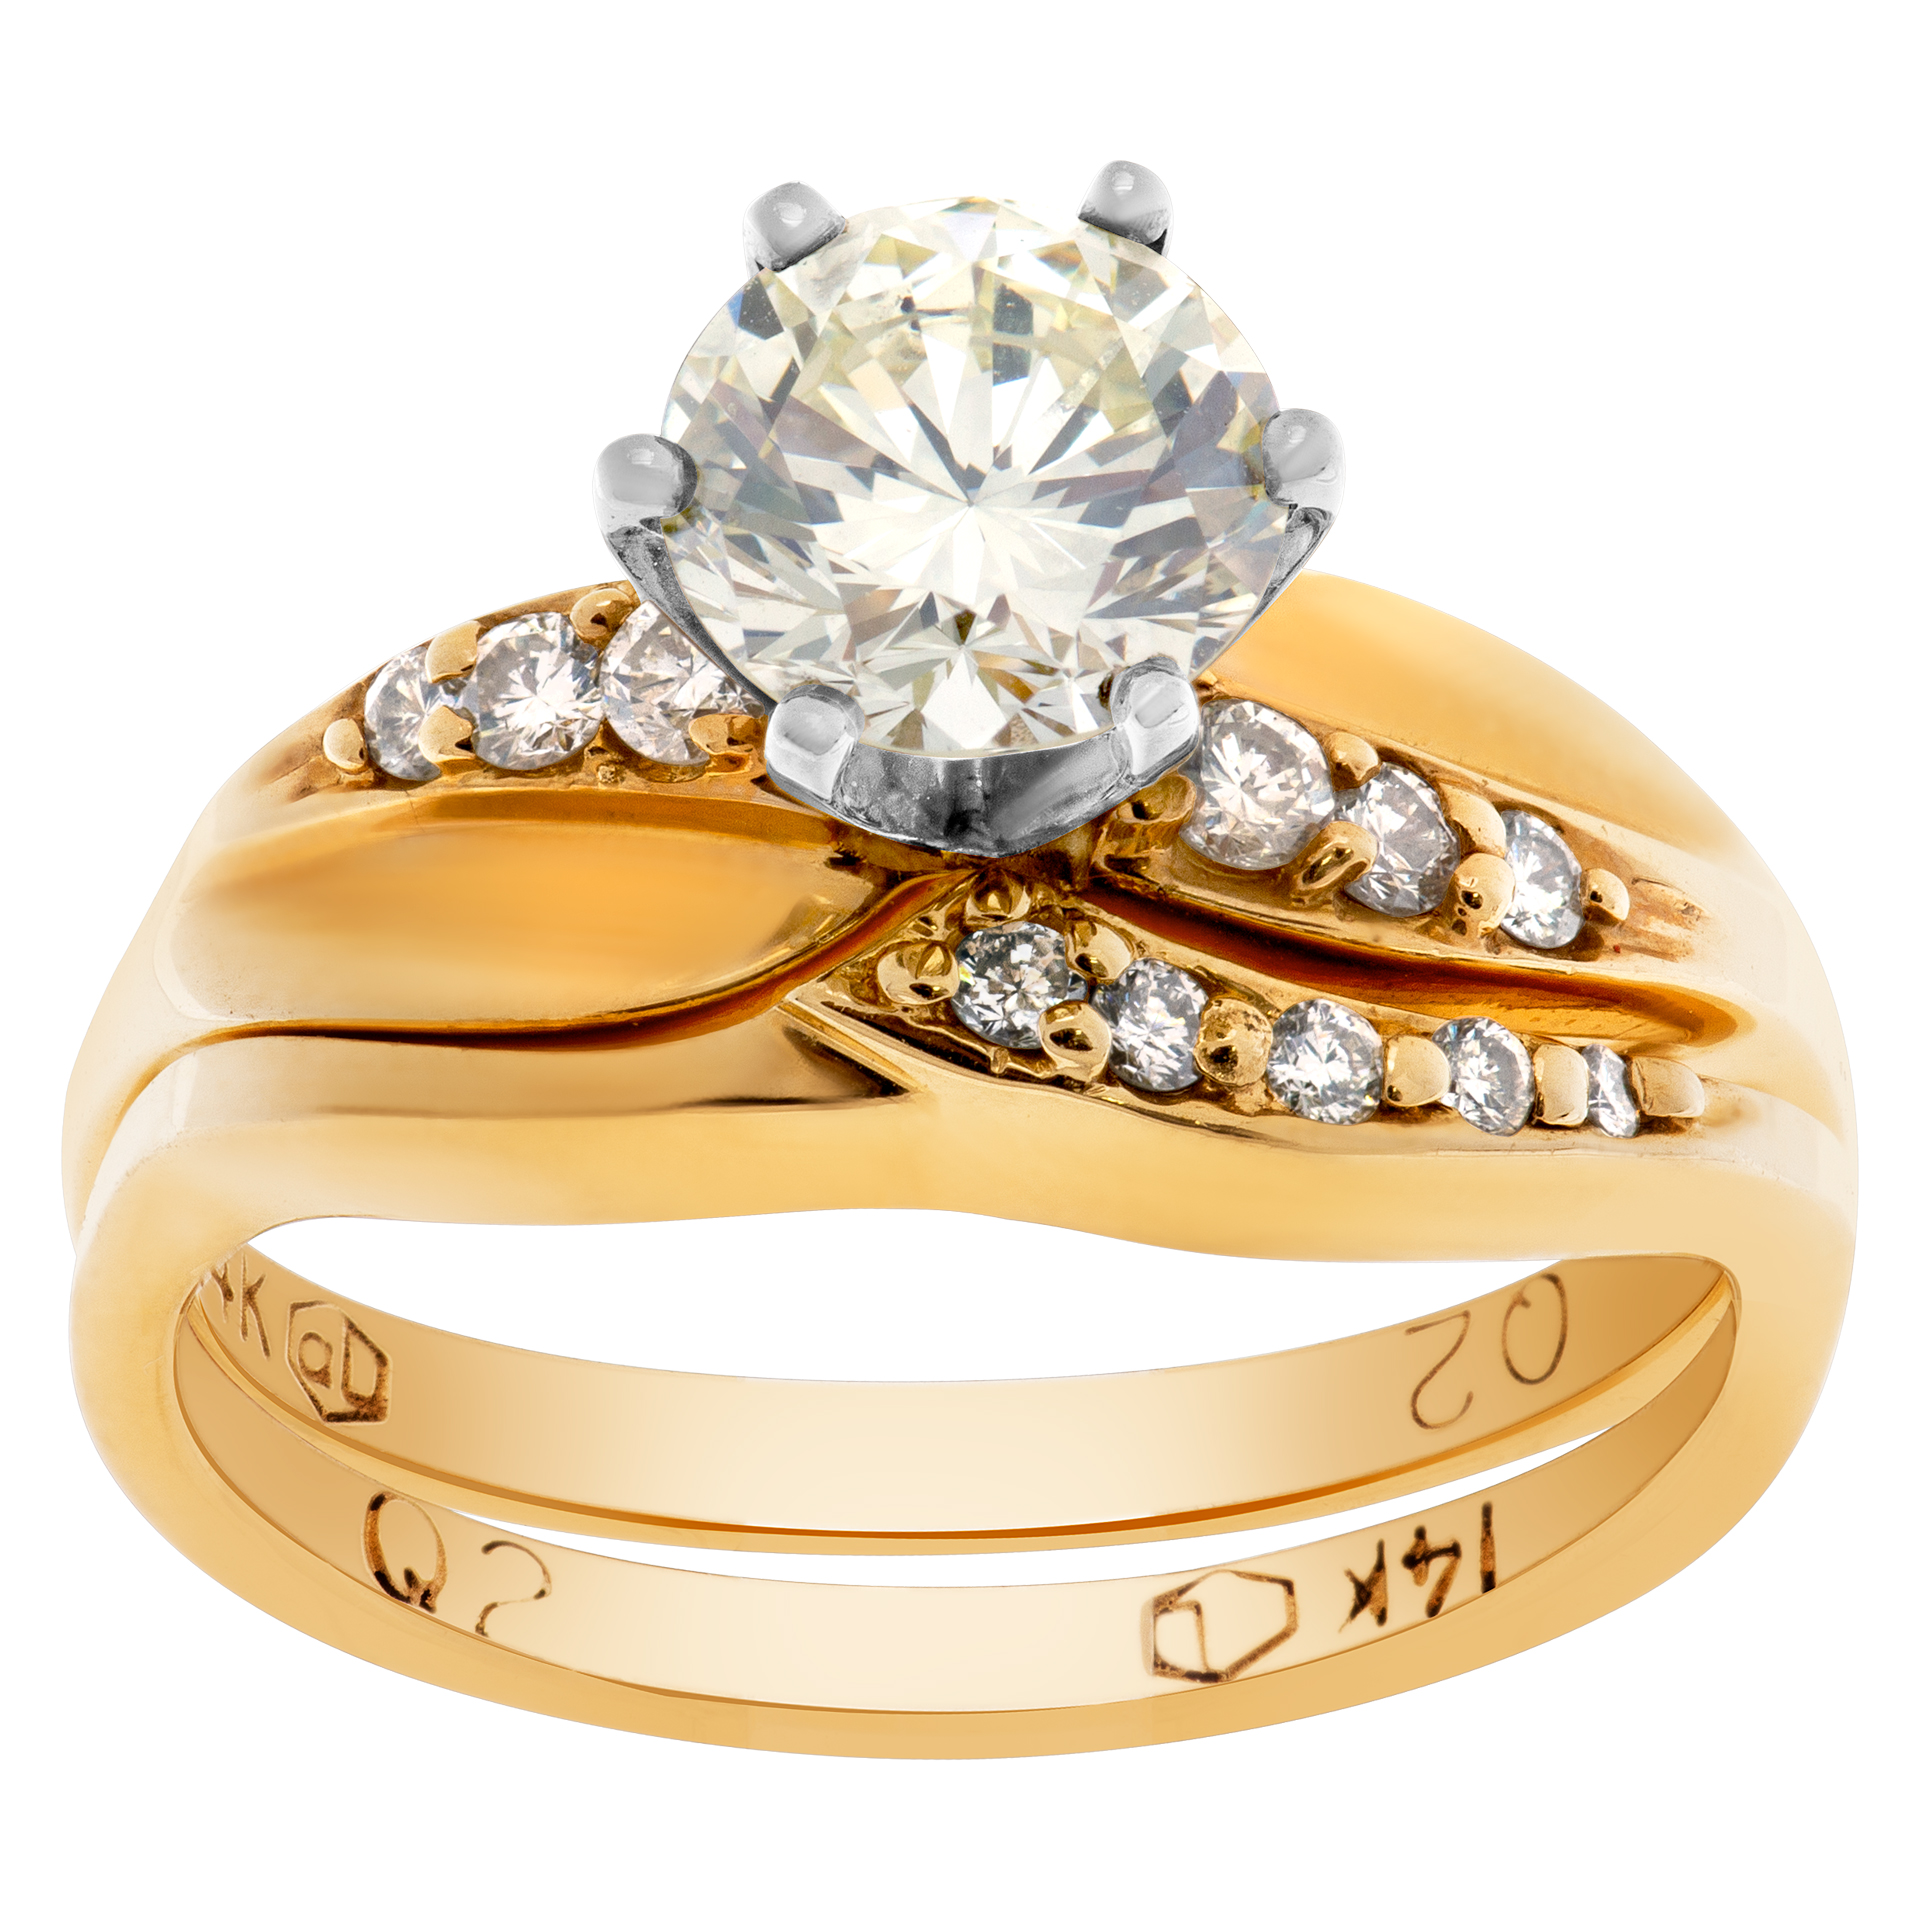 GIA certified round brilliant cut diamond 1.05 carat (W-X Color, VS-1 Clarity) ring image 1